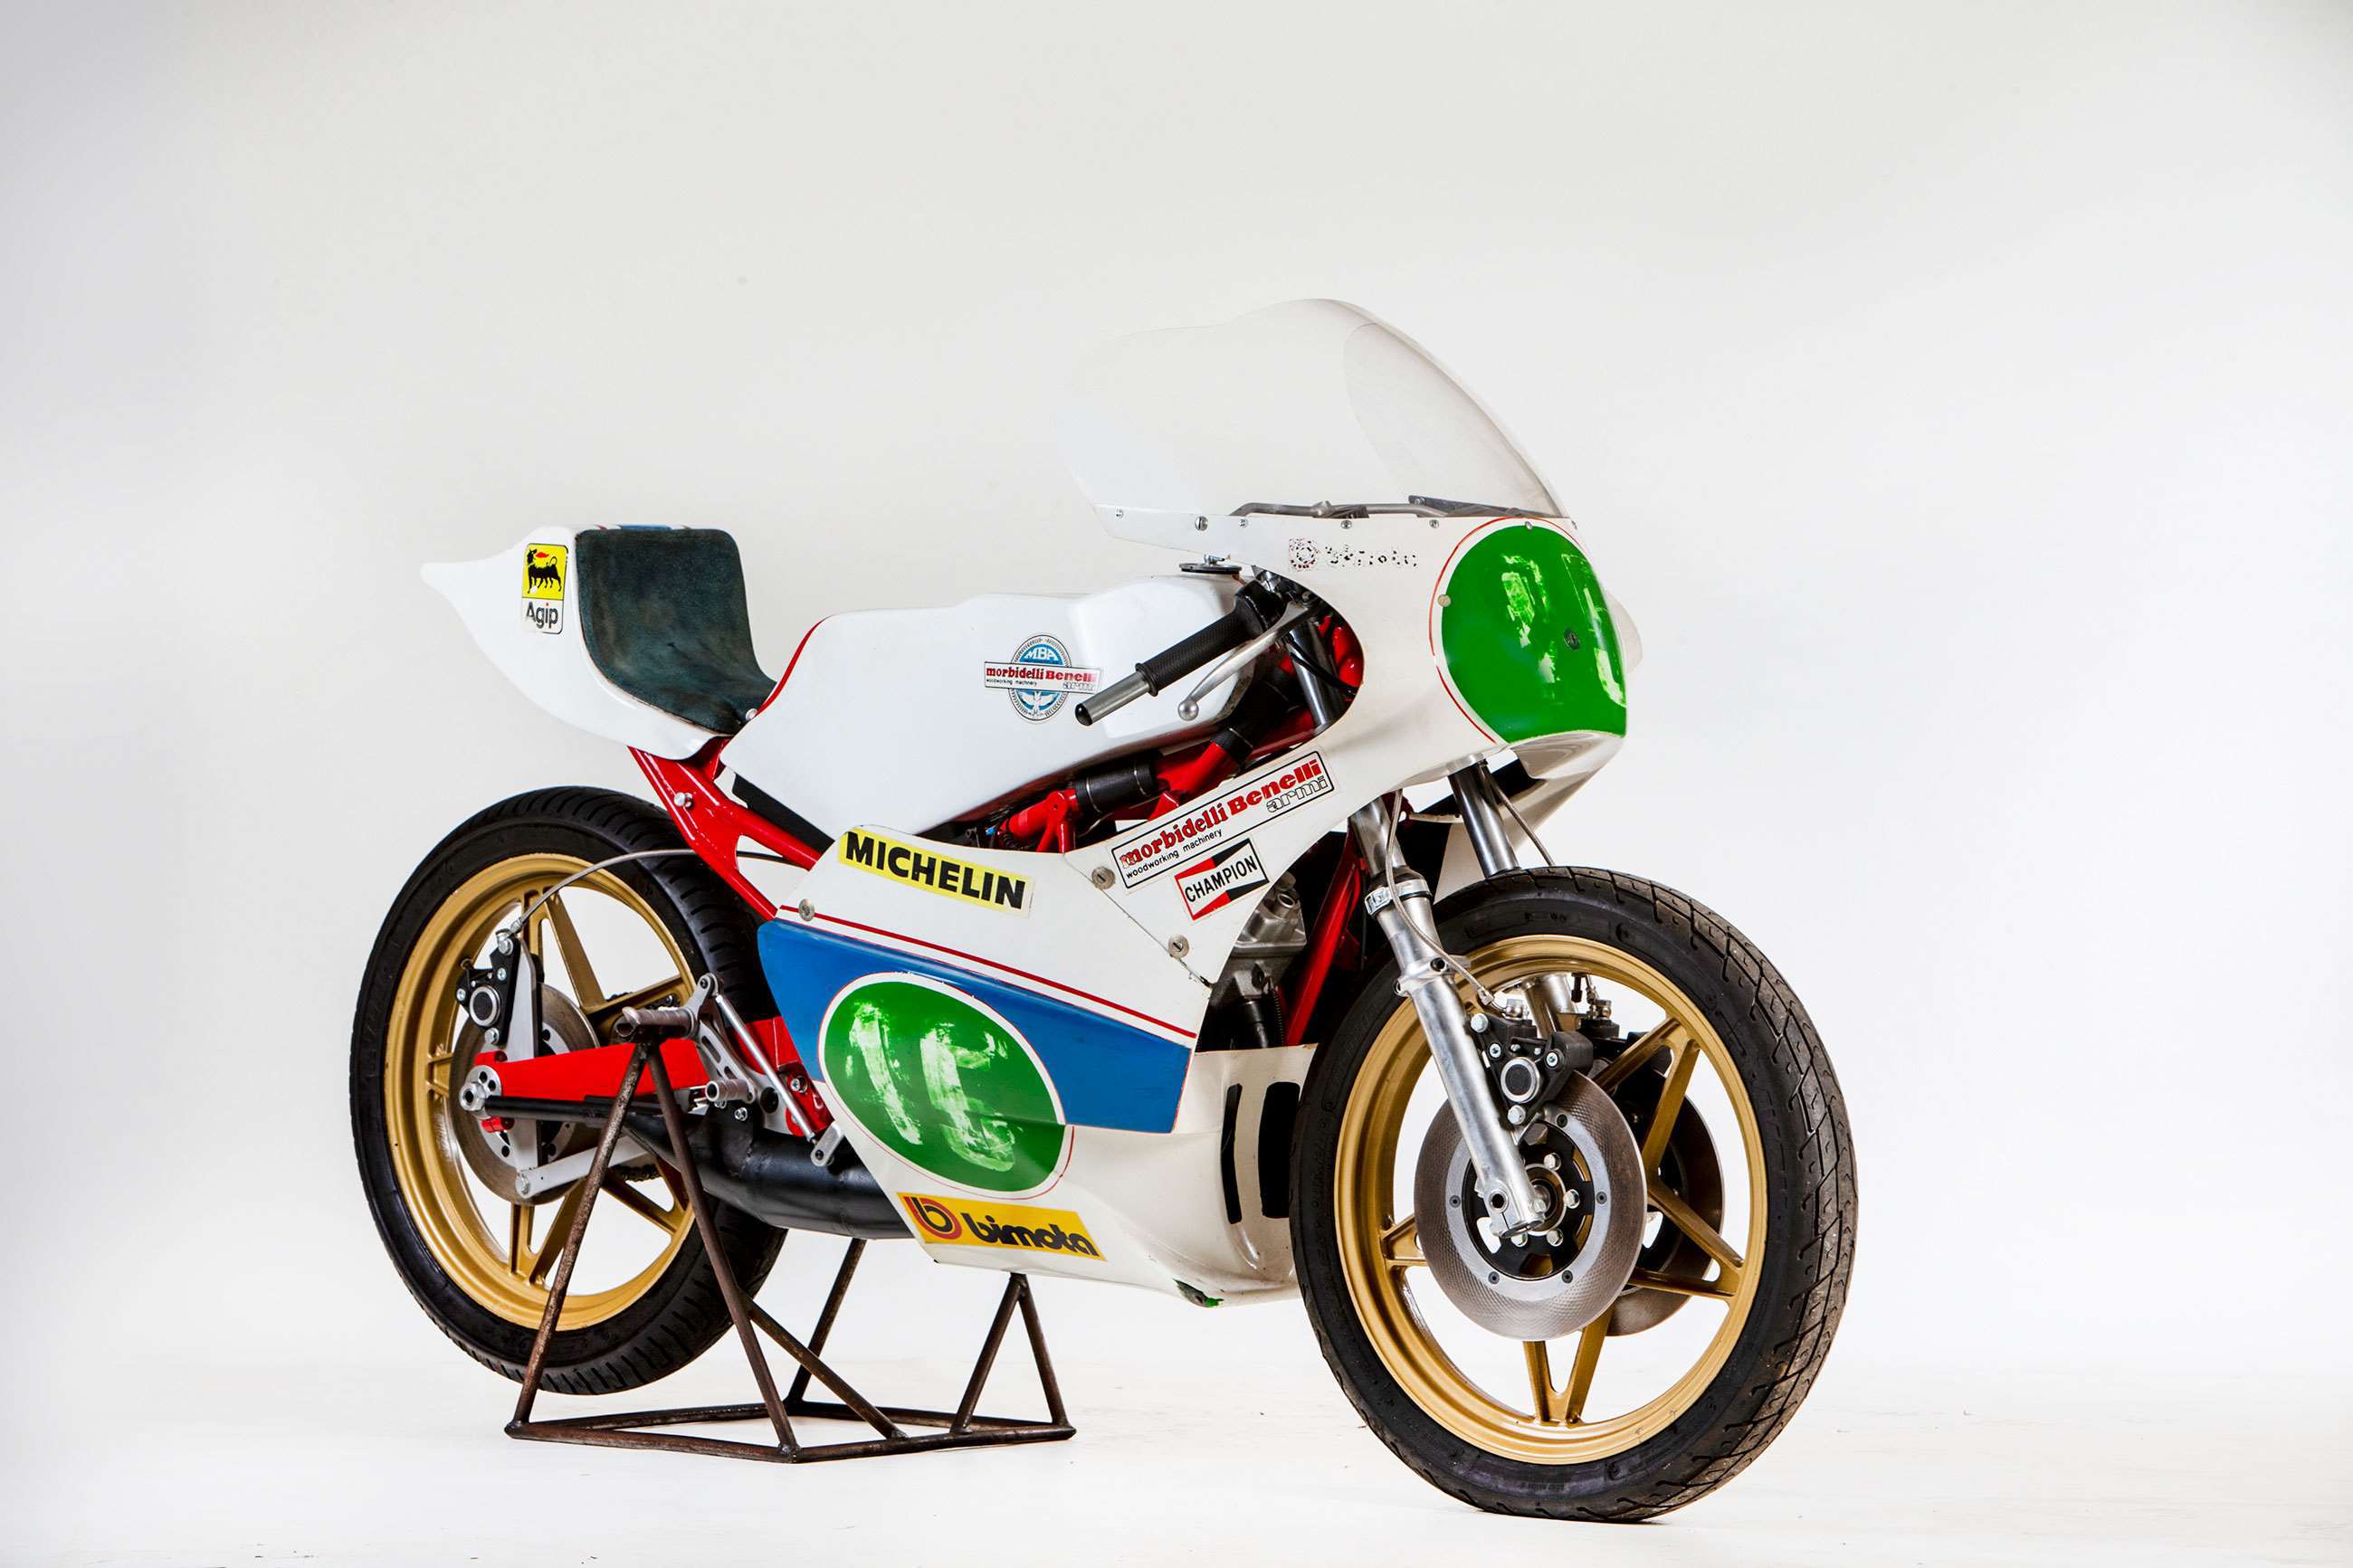 ex-giacomo-agostini-1976-morbidelli-250cc-grand-prix-racing-motorcycle-bonhams-goodwood-19022020.jpg